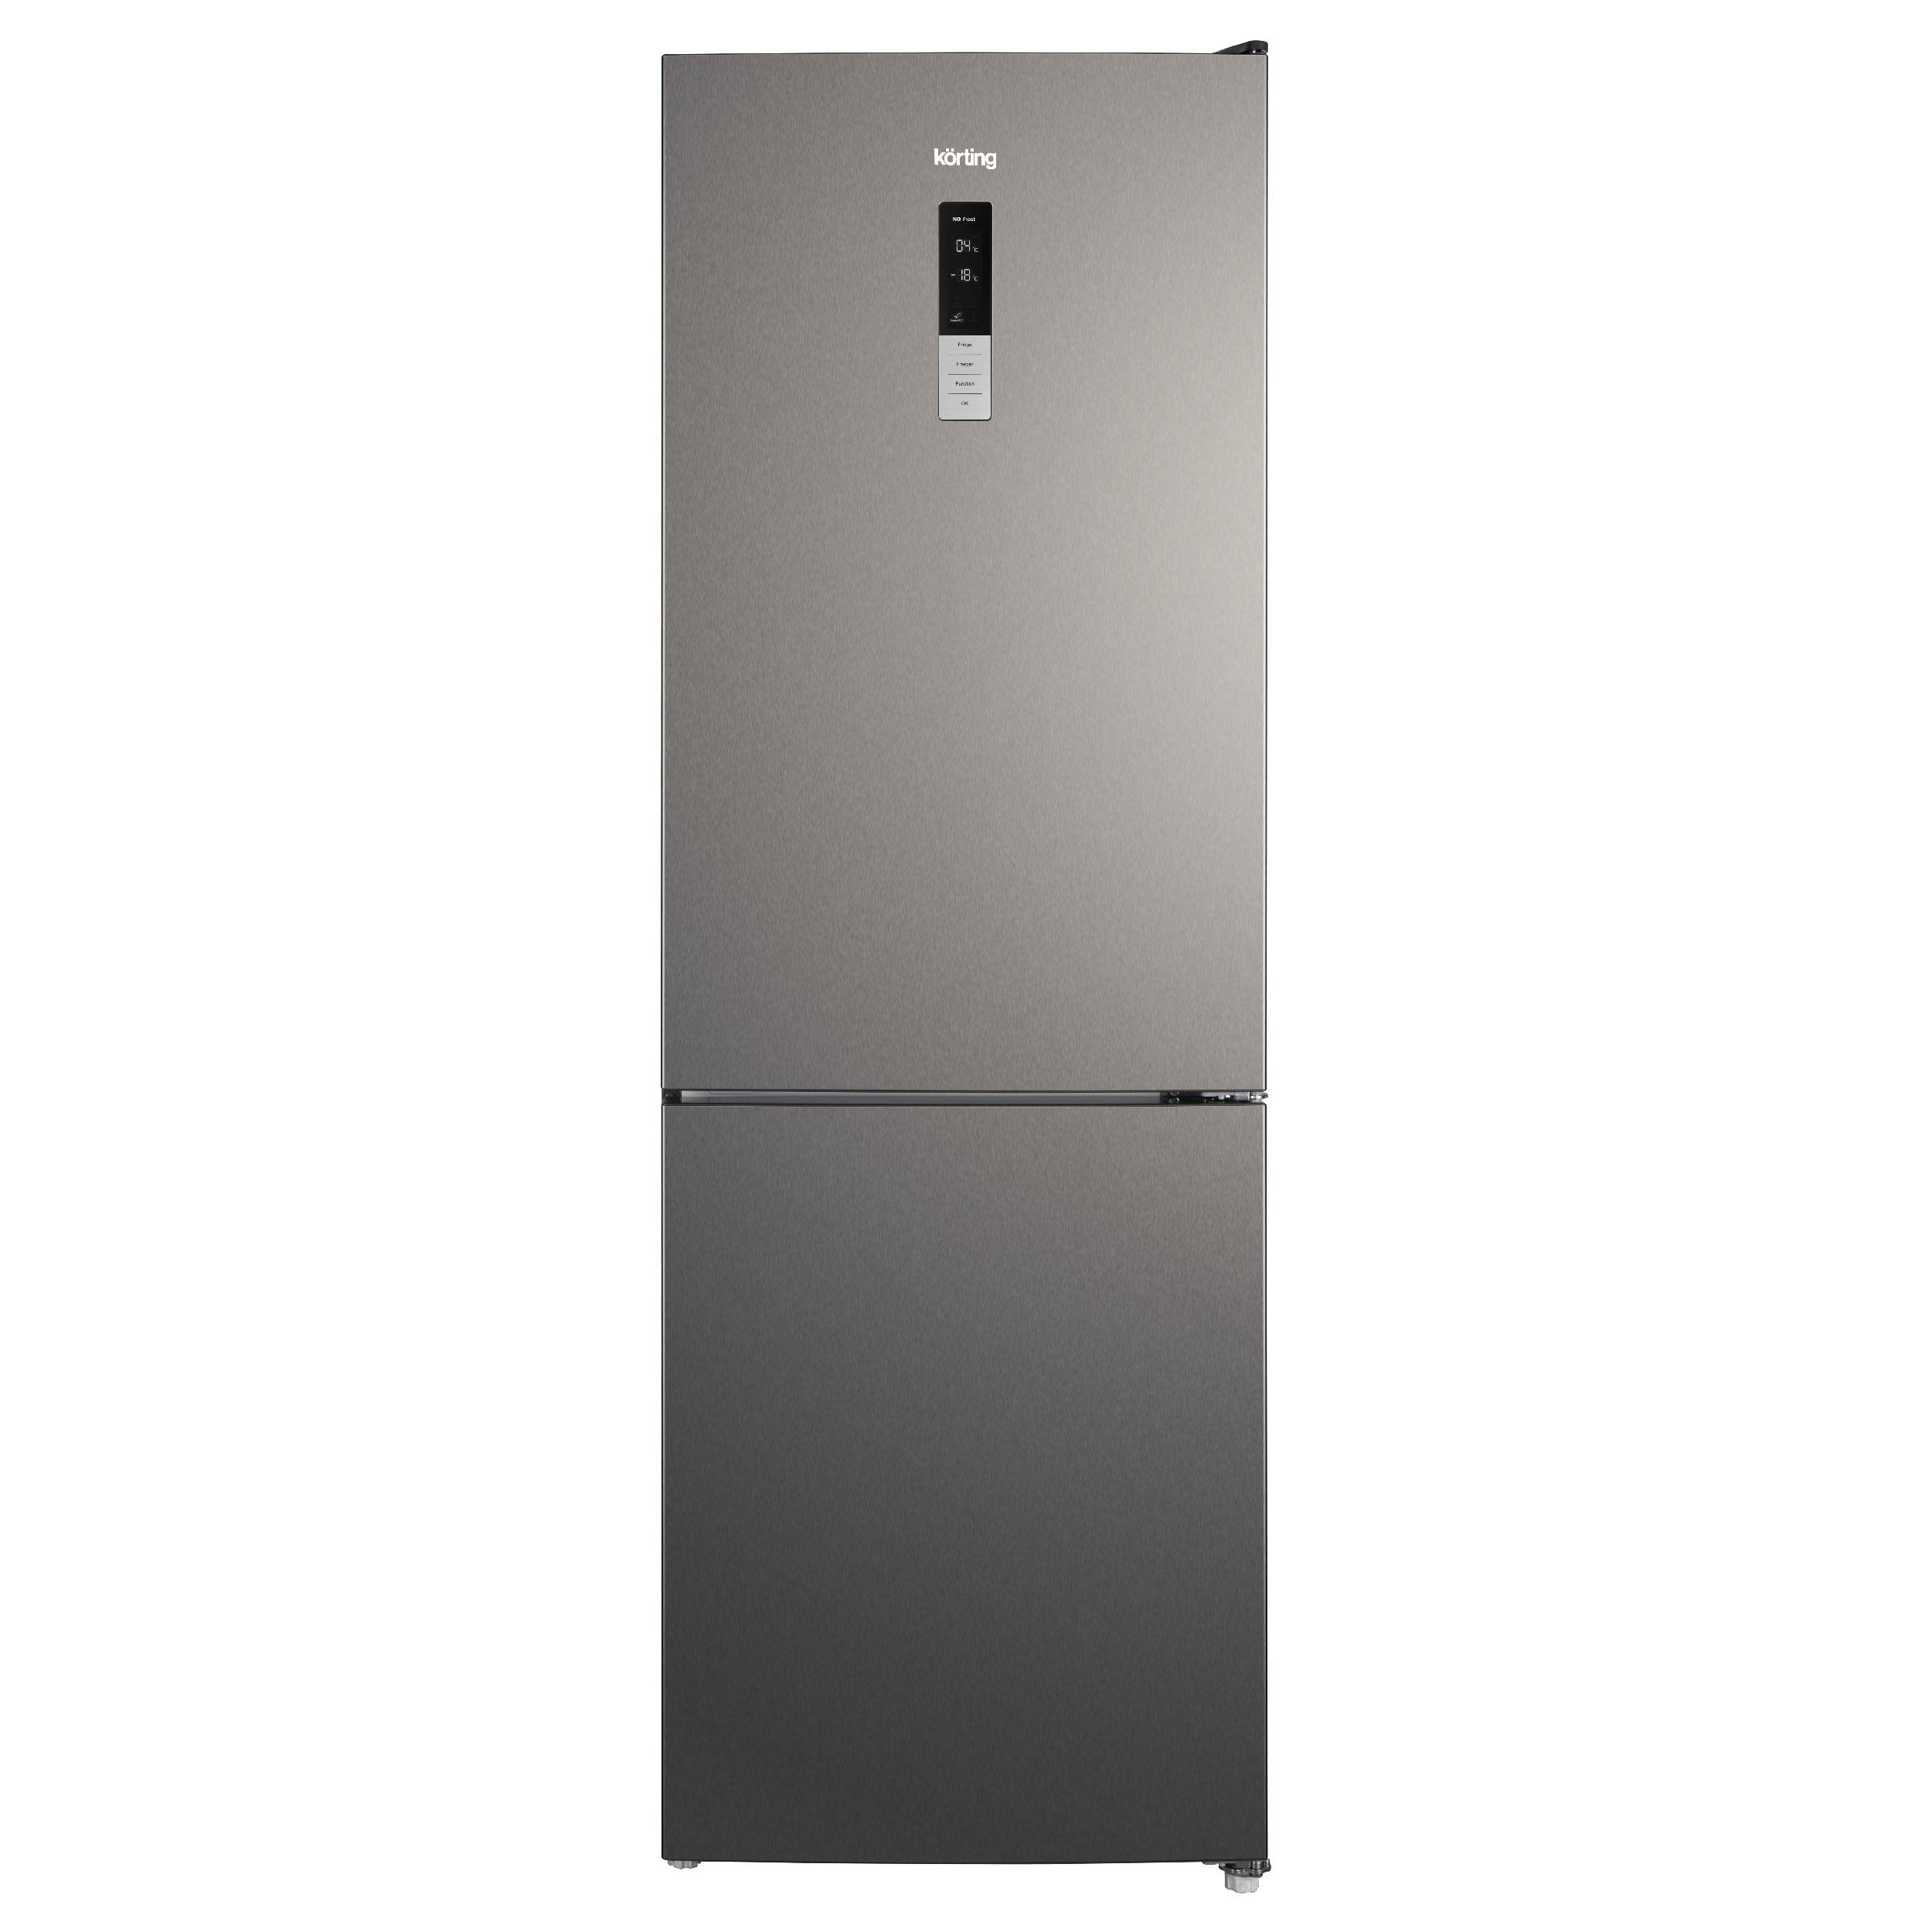 Холодильник Korting KNFC 61869 X серебристый, серый двухкамерный холодильник korting knfc 62029 x